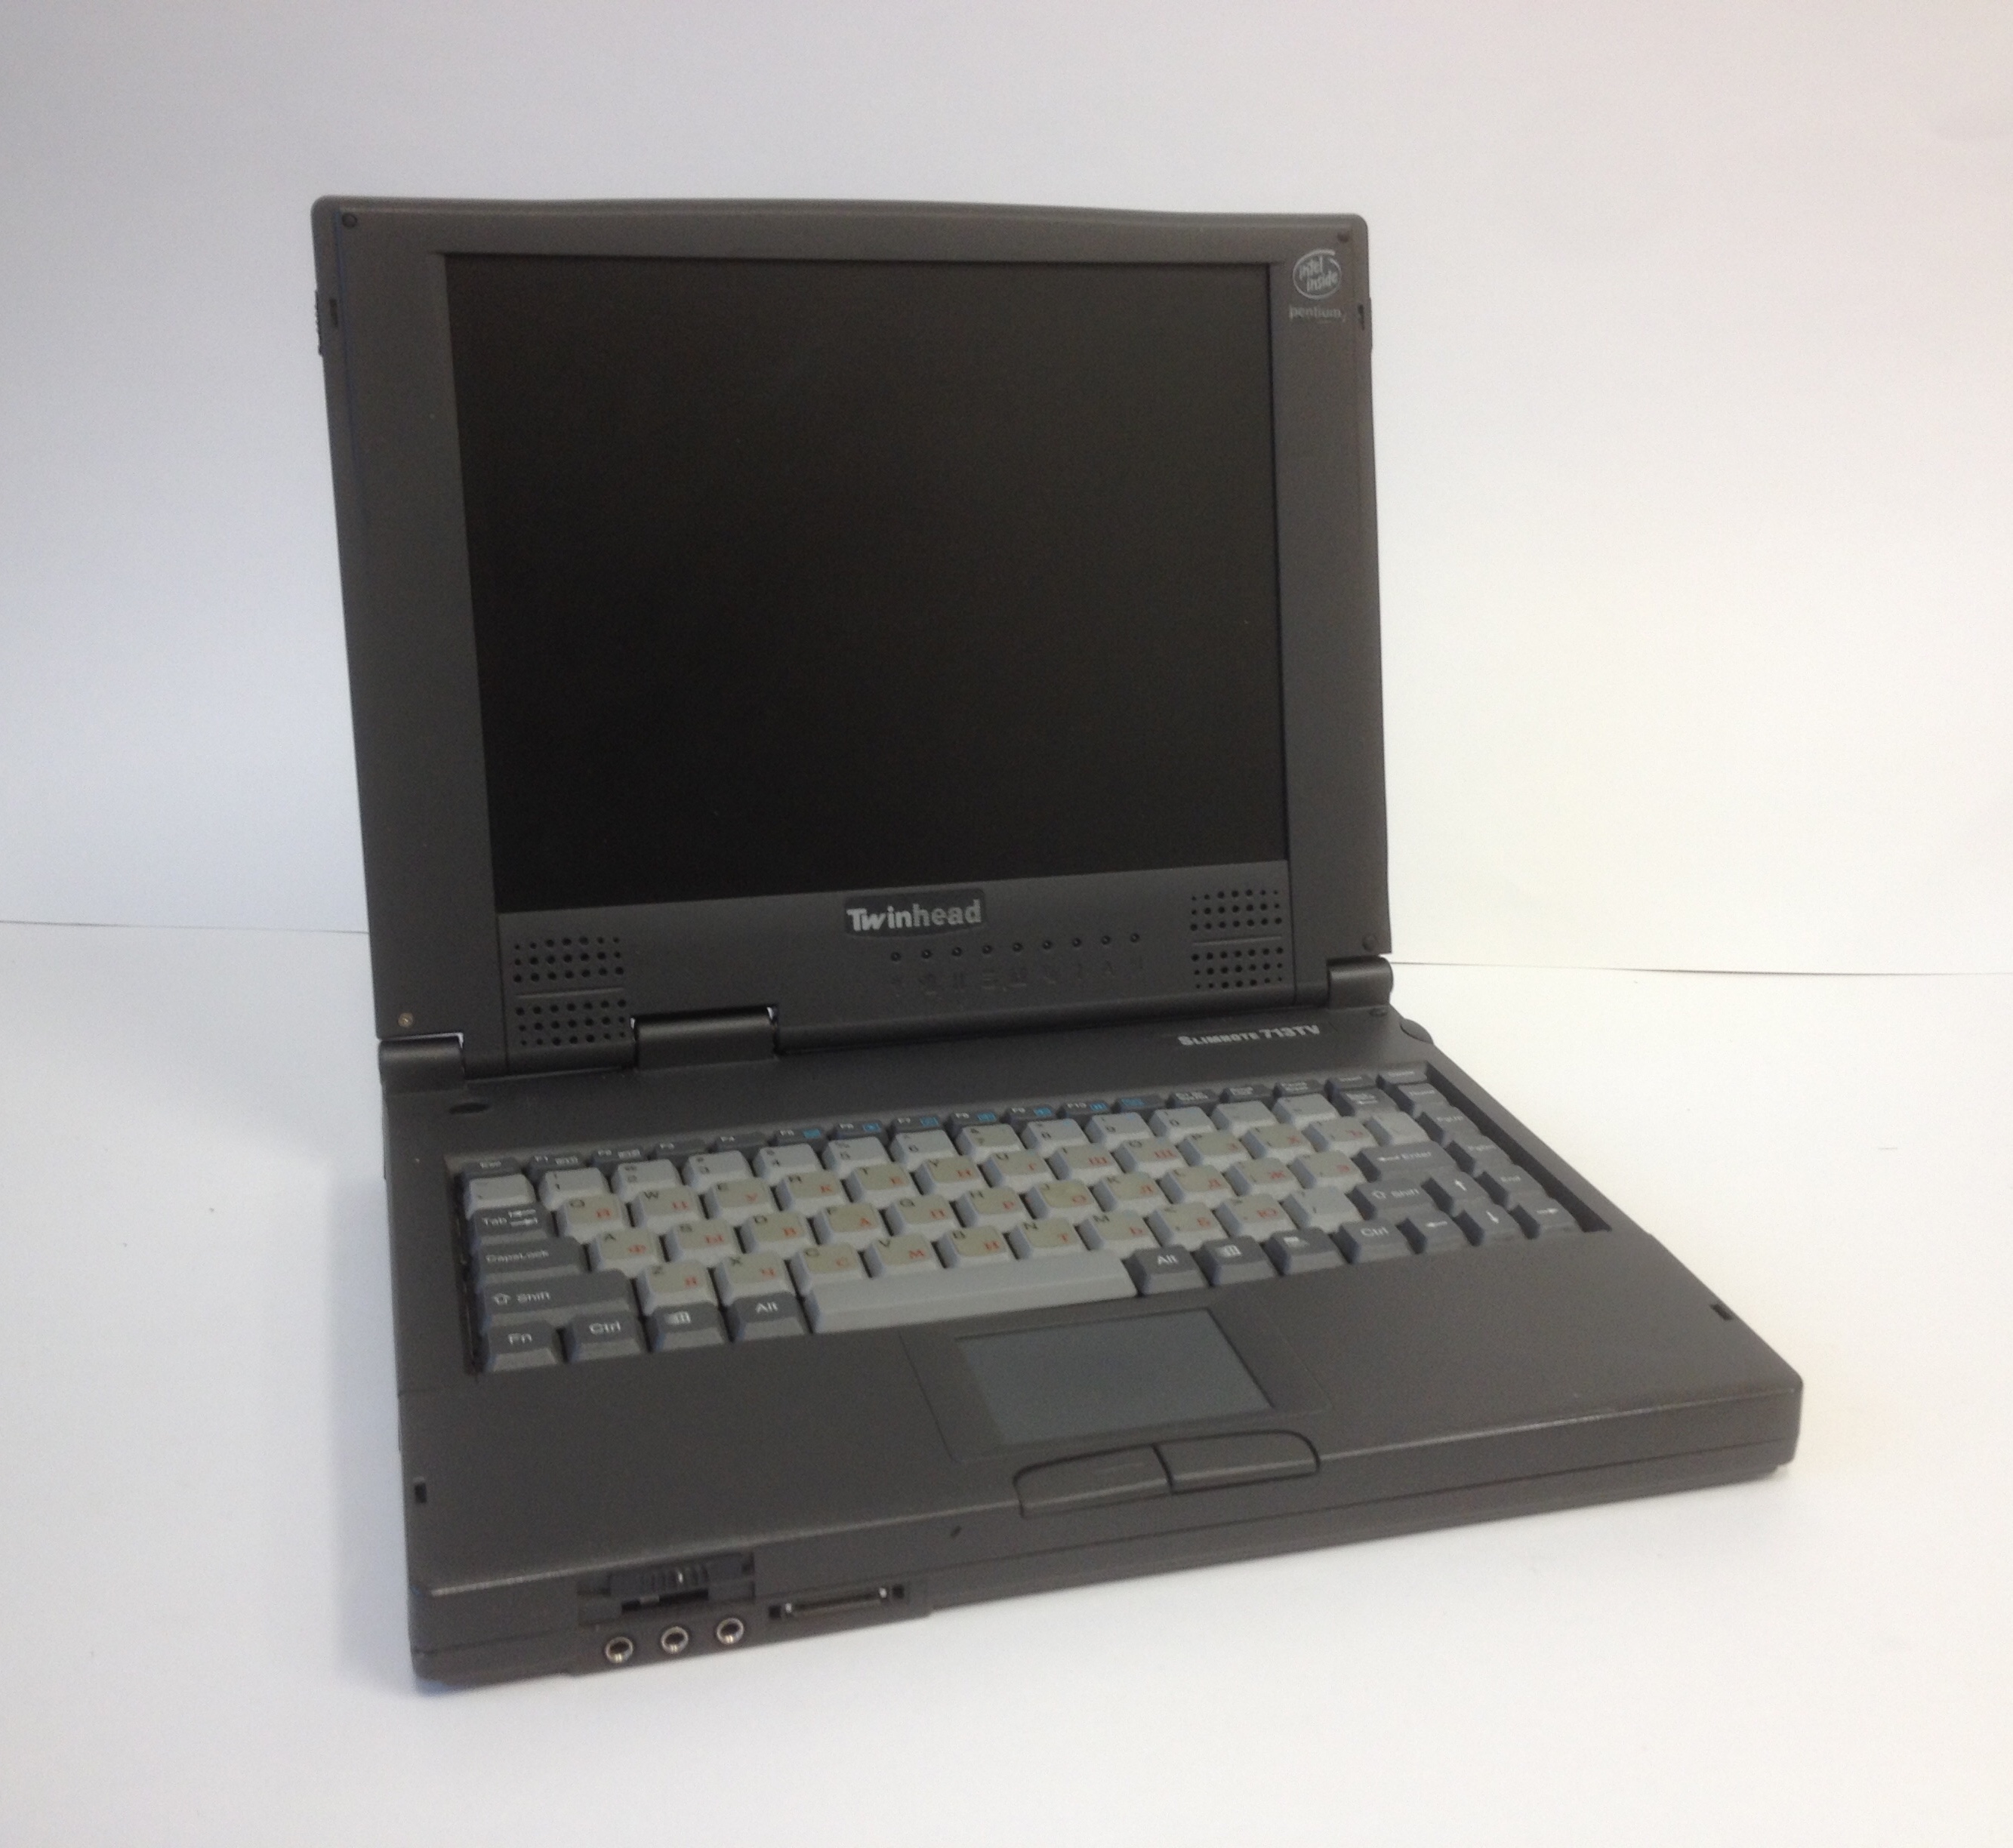 Легкие старые ноутбуки. Twinhead ноутбук 1994 года. Twinhead SX ретро ноутбук. Старый и новый ноутбук. Twinhead Durabook n1400.